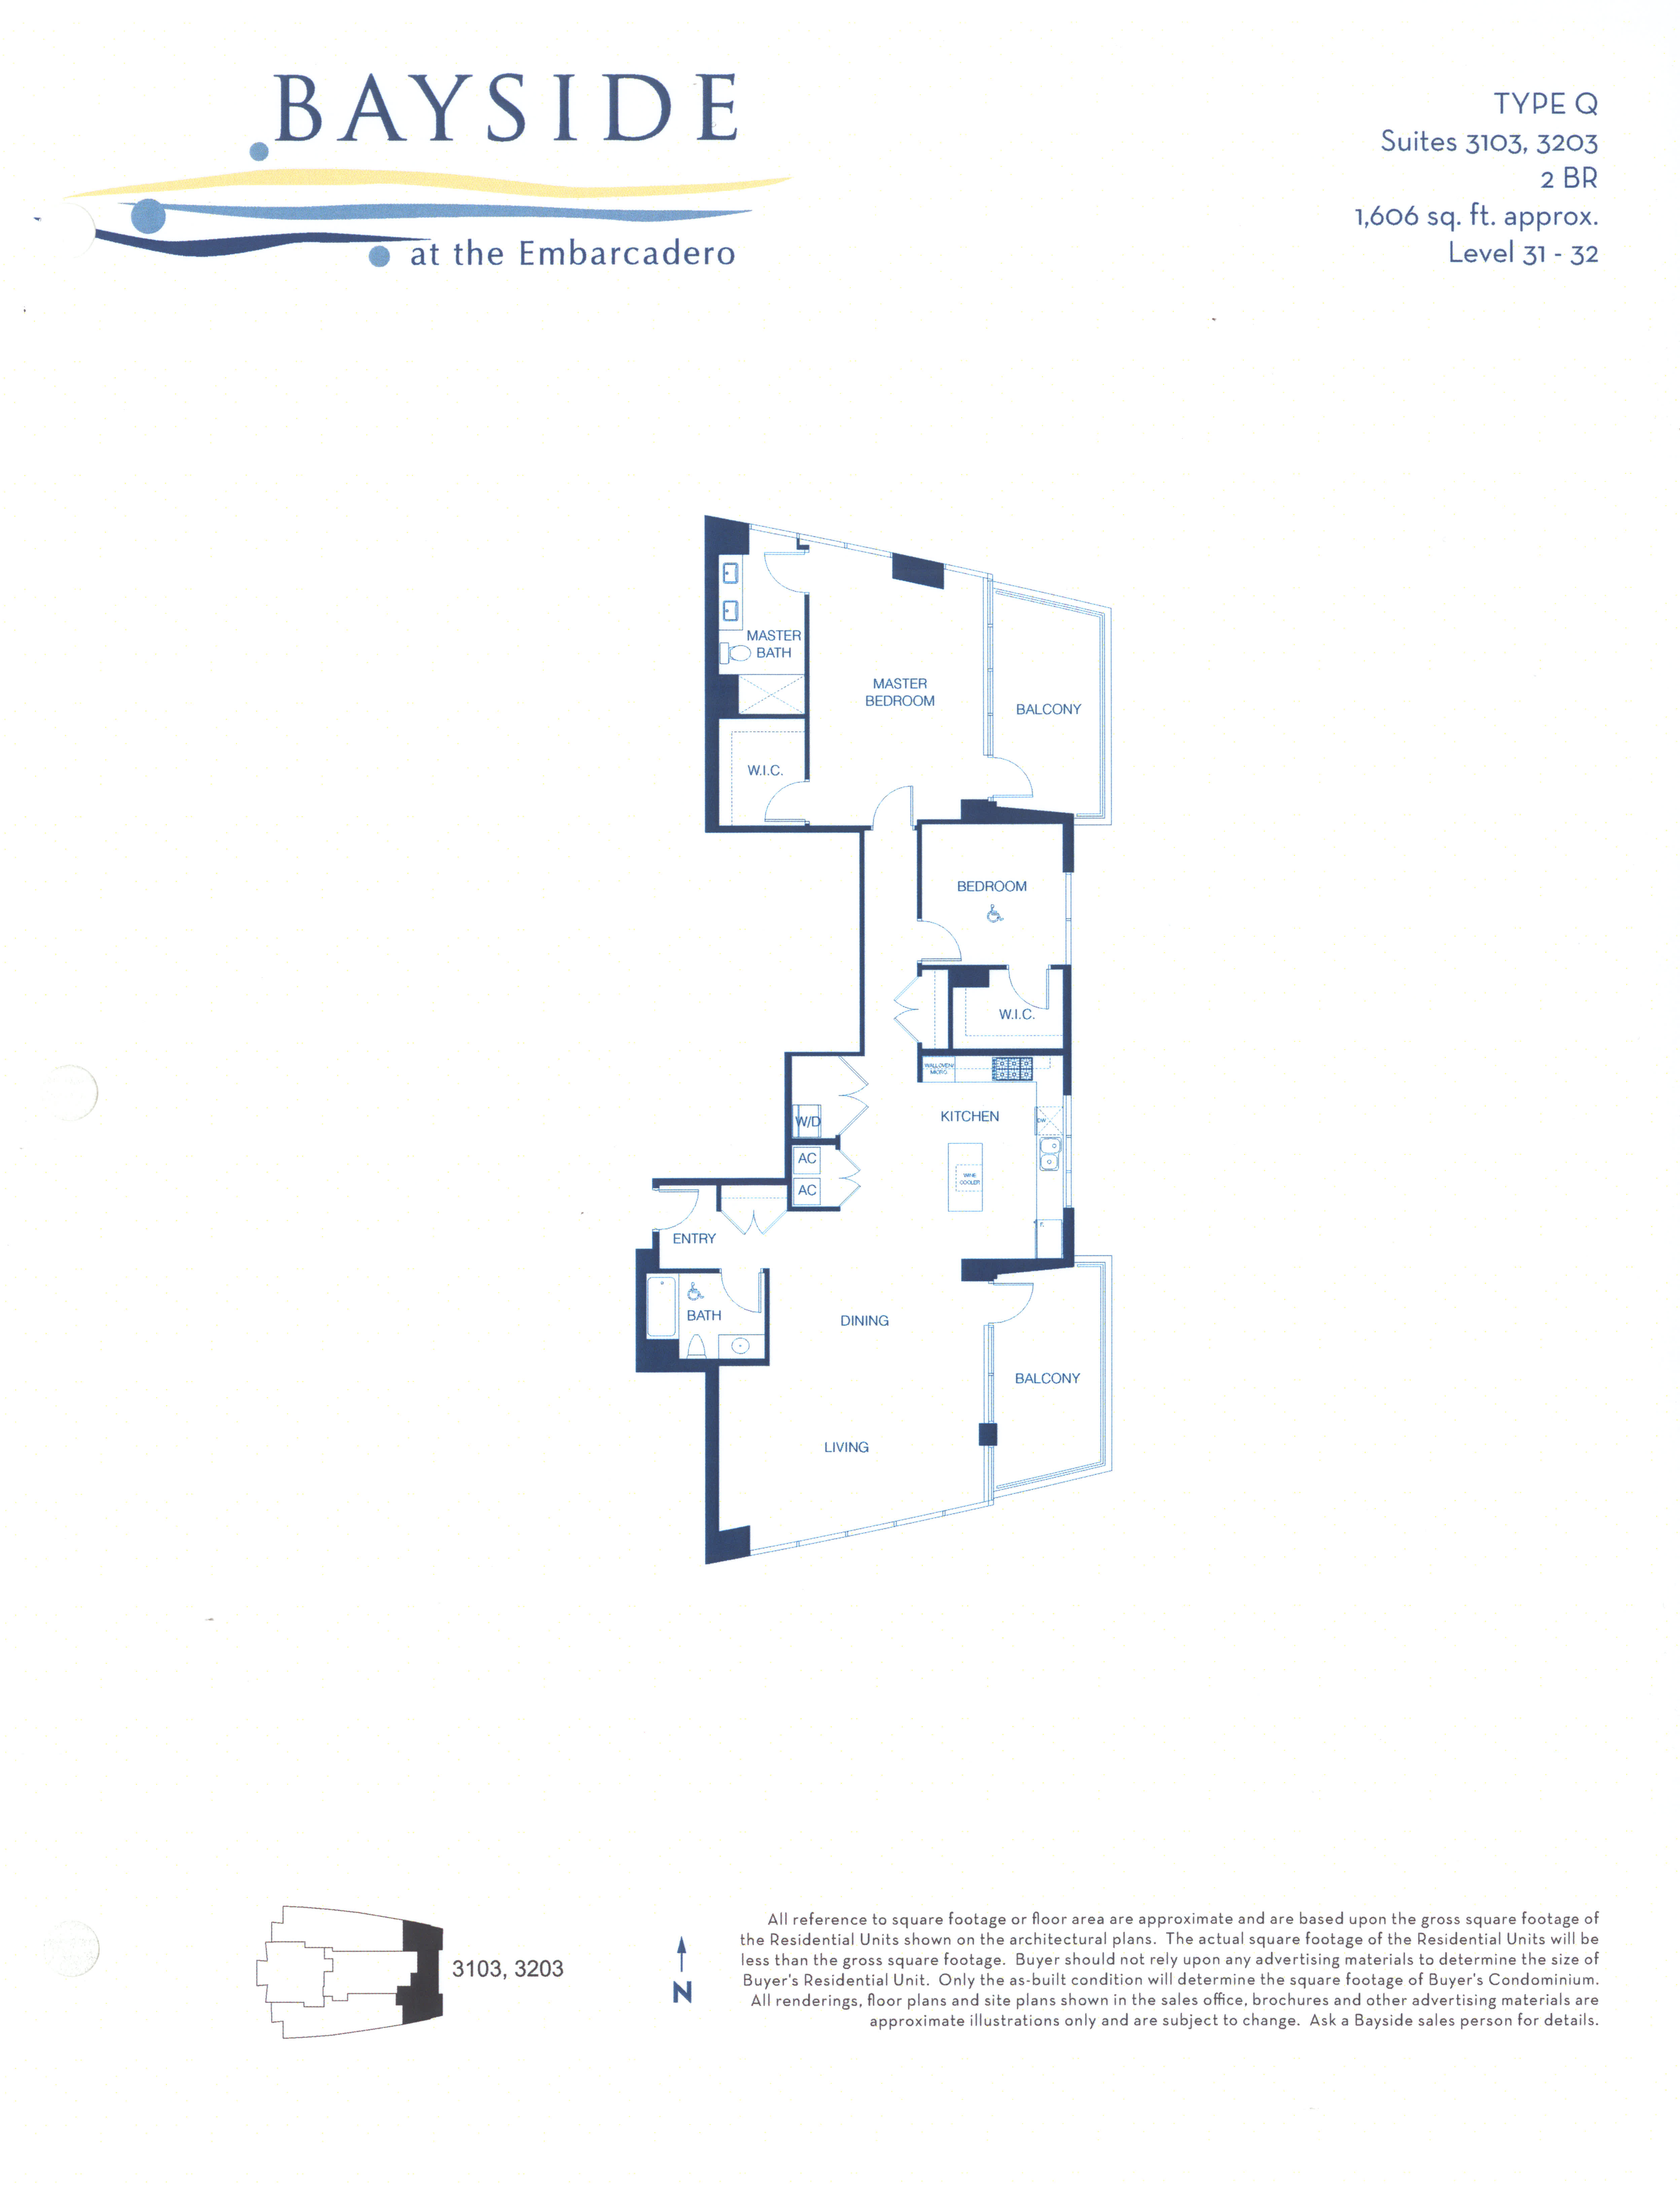 Bayside Floor Plan Level 31- 32 Type Q